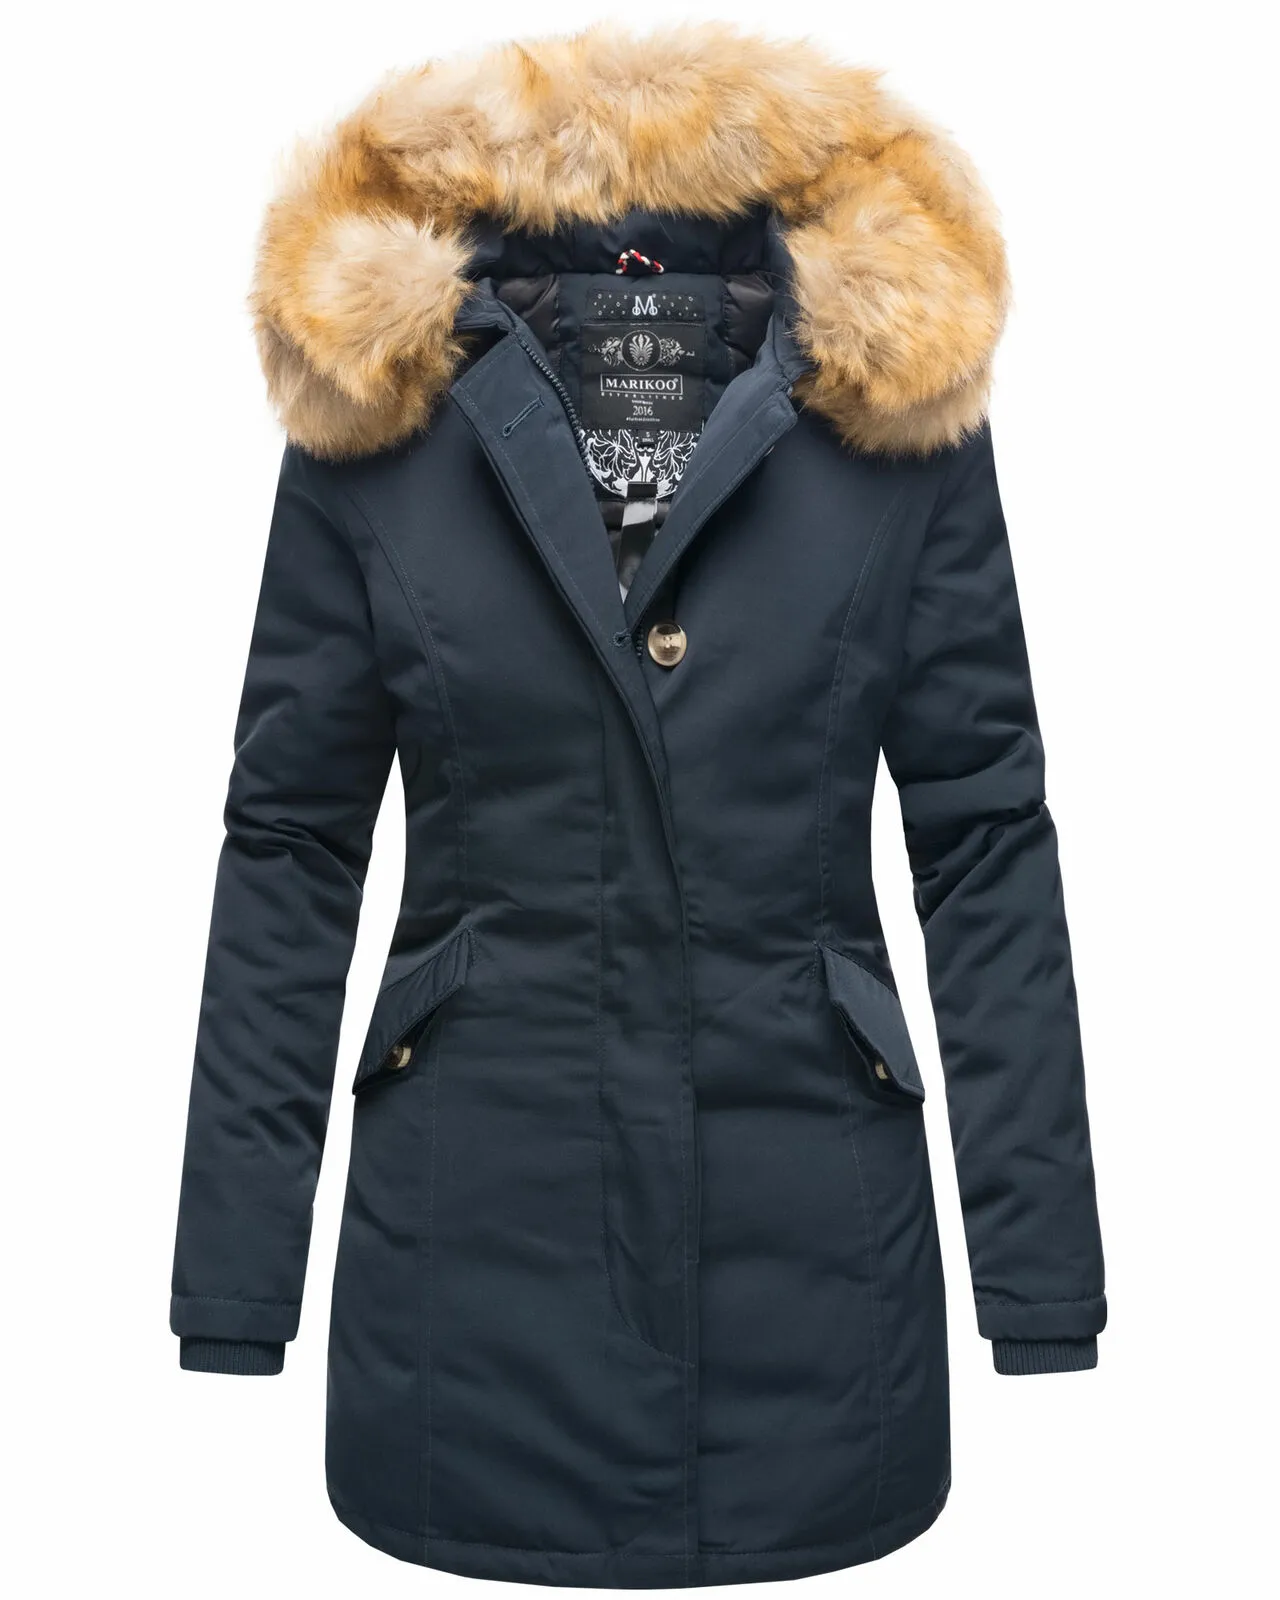 Ladies winter jacket coat coat winter jacket warm lining A